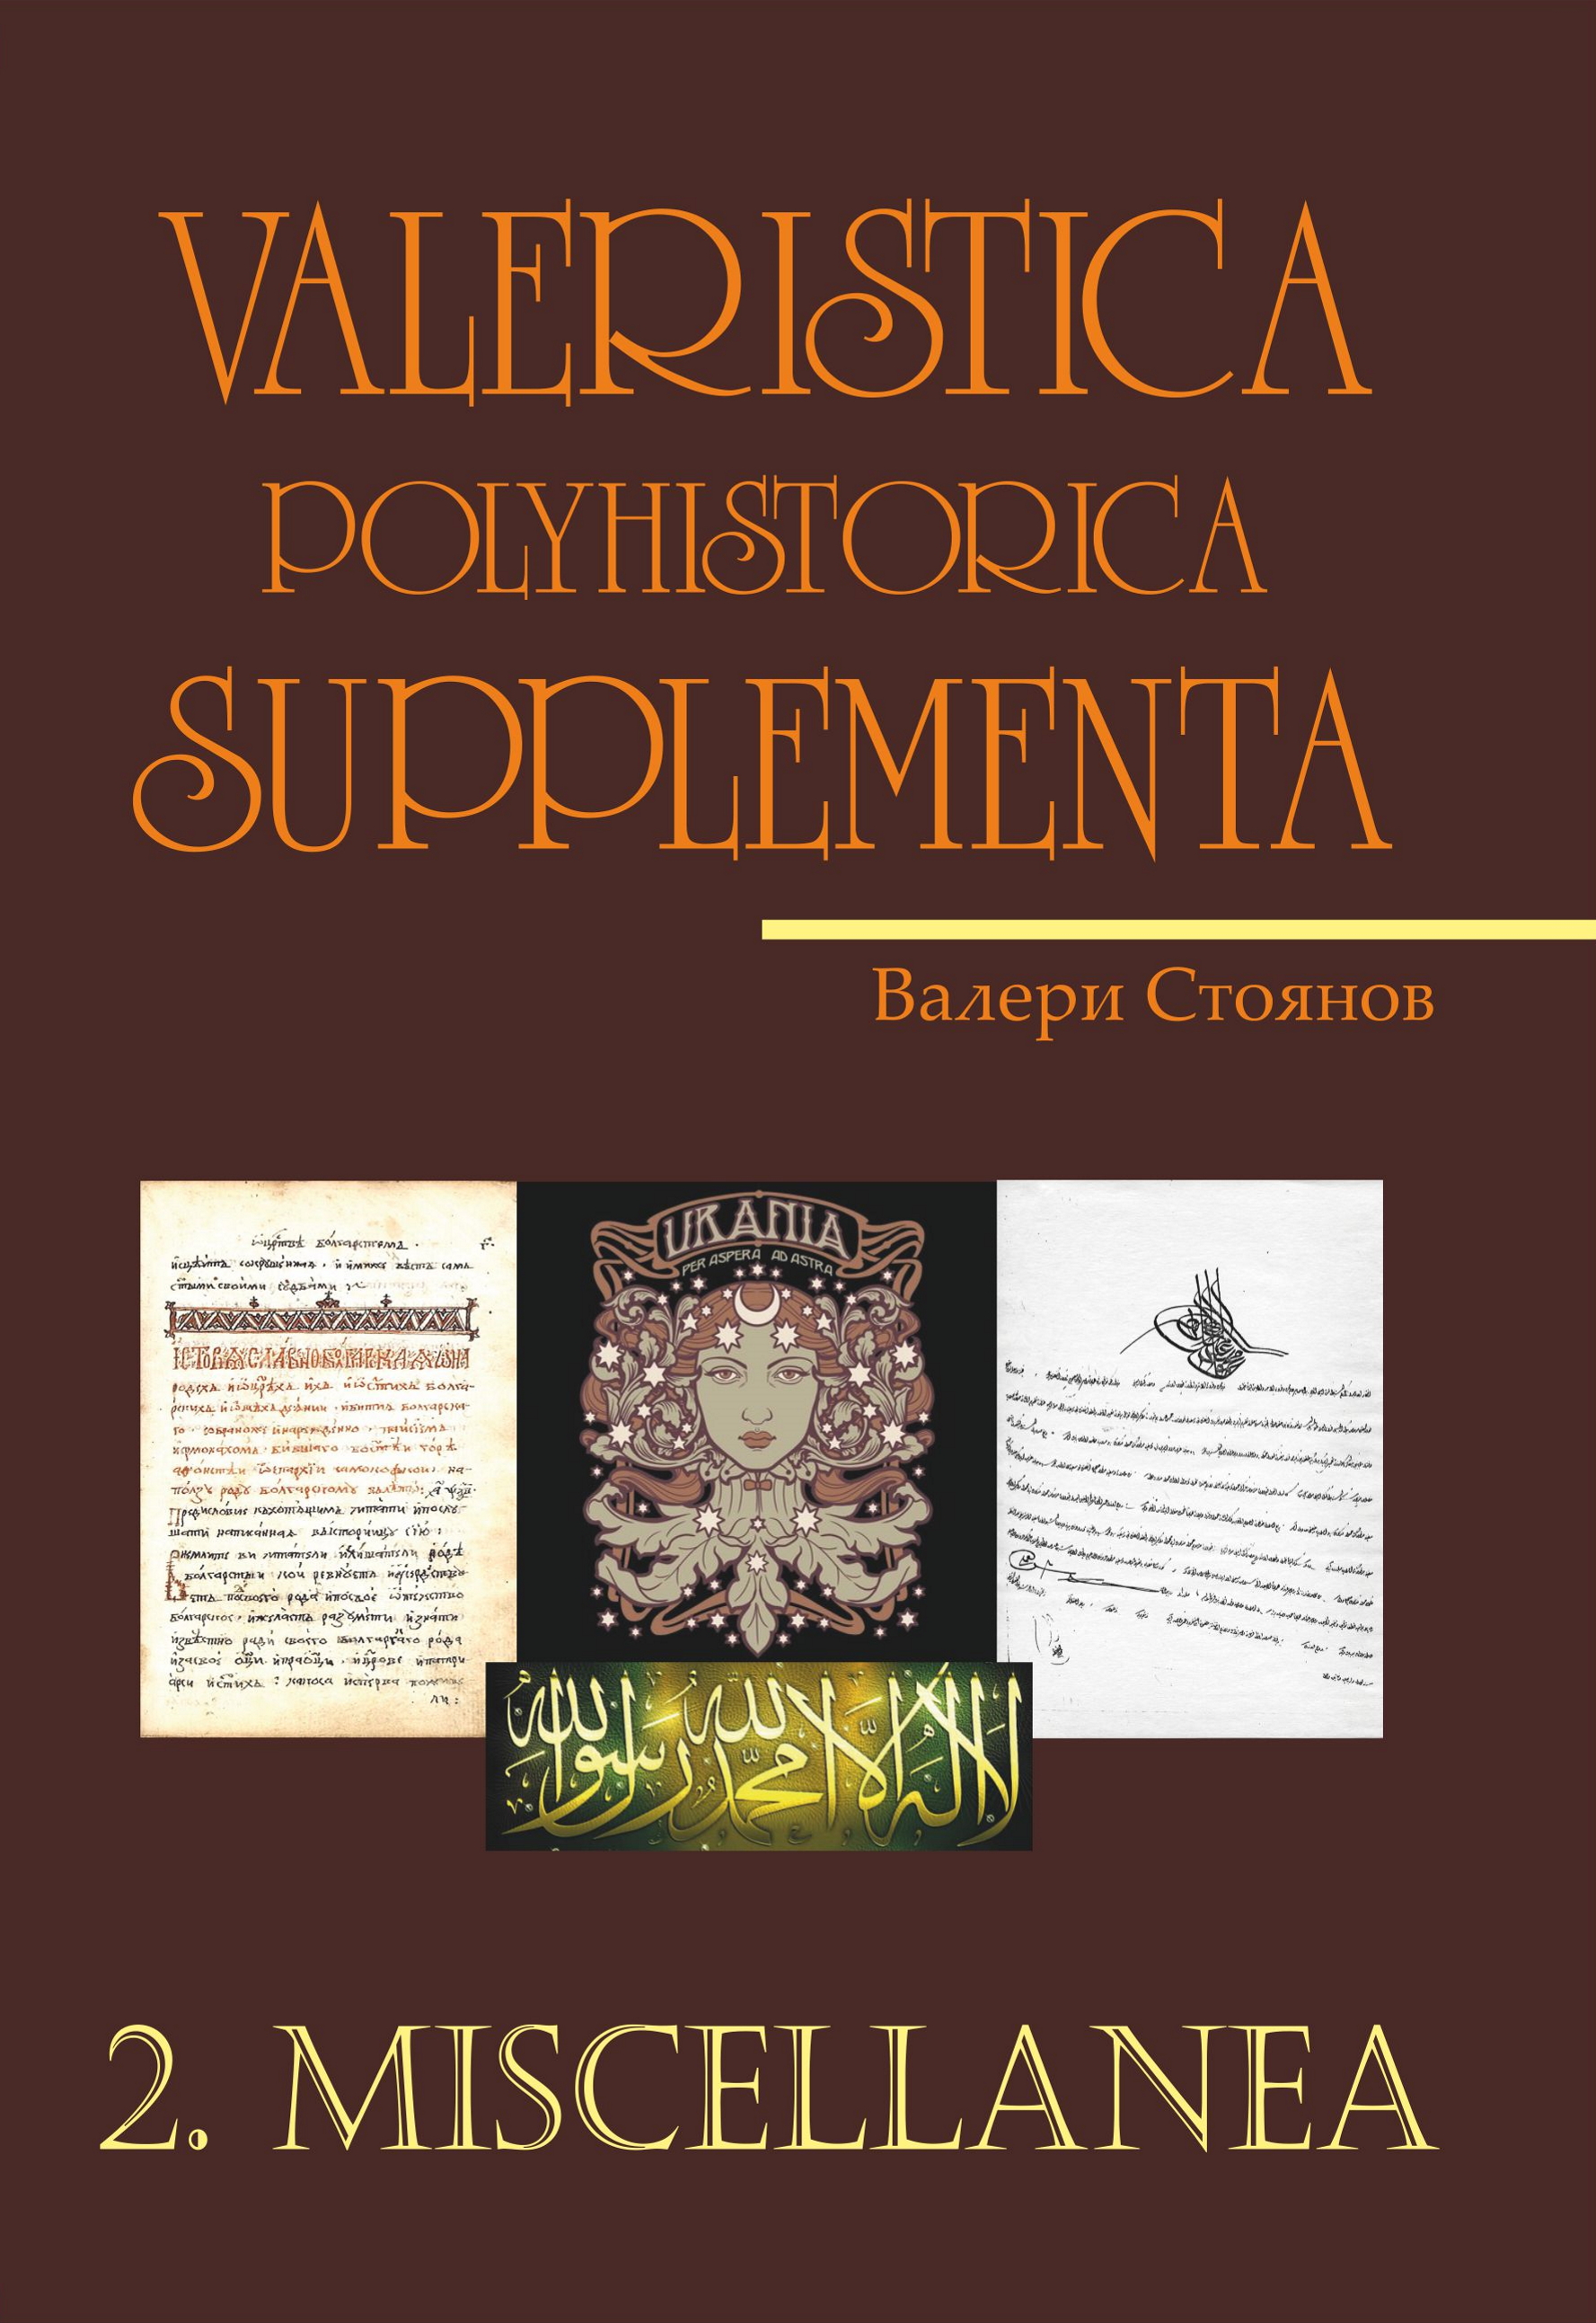 Valery Stojanow: Valeristica Polyhistorica Supplementa, vol. 2. Miscellanea